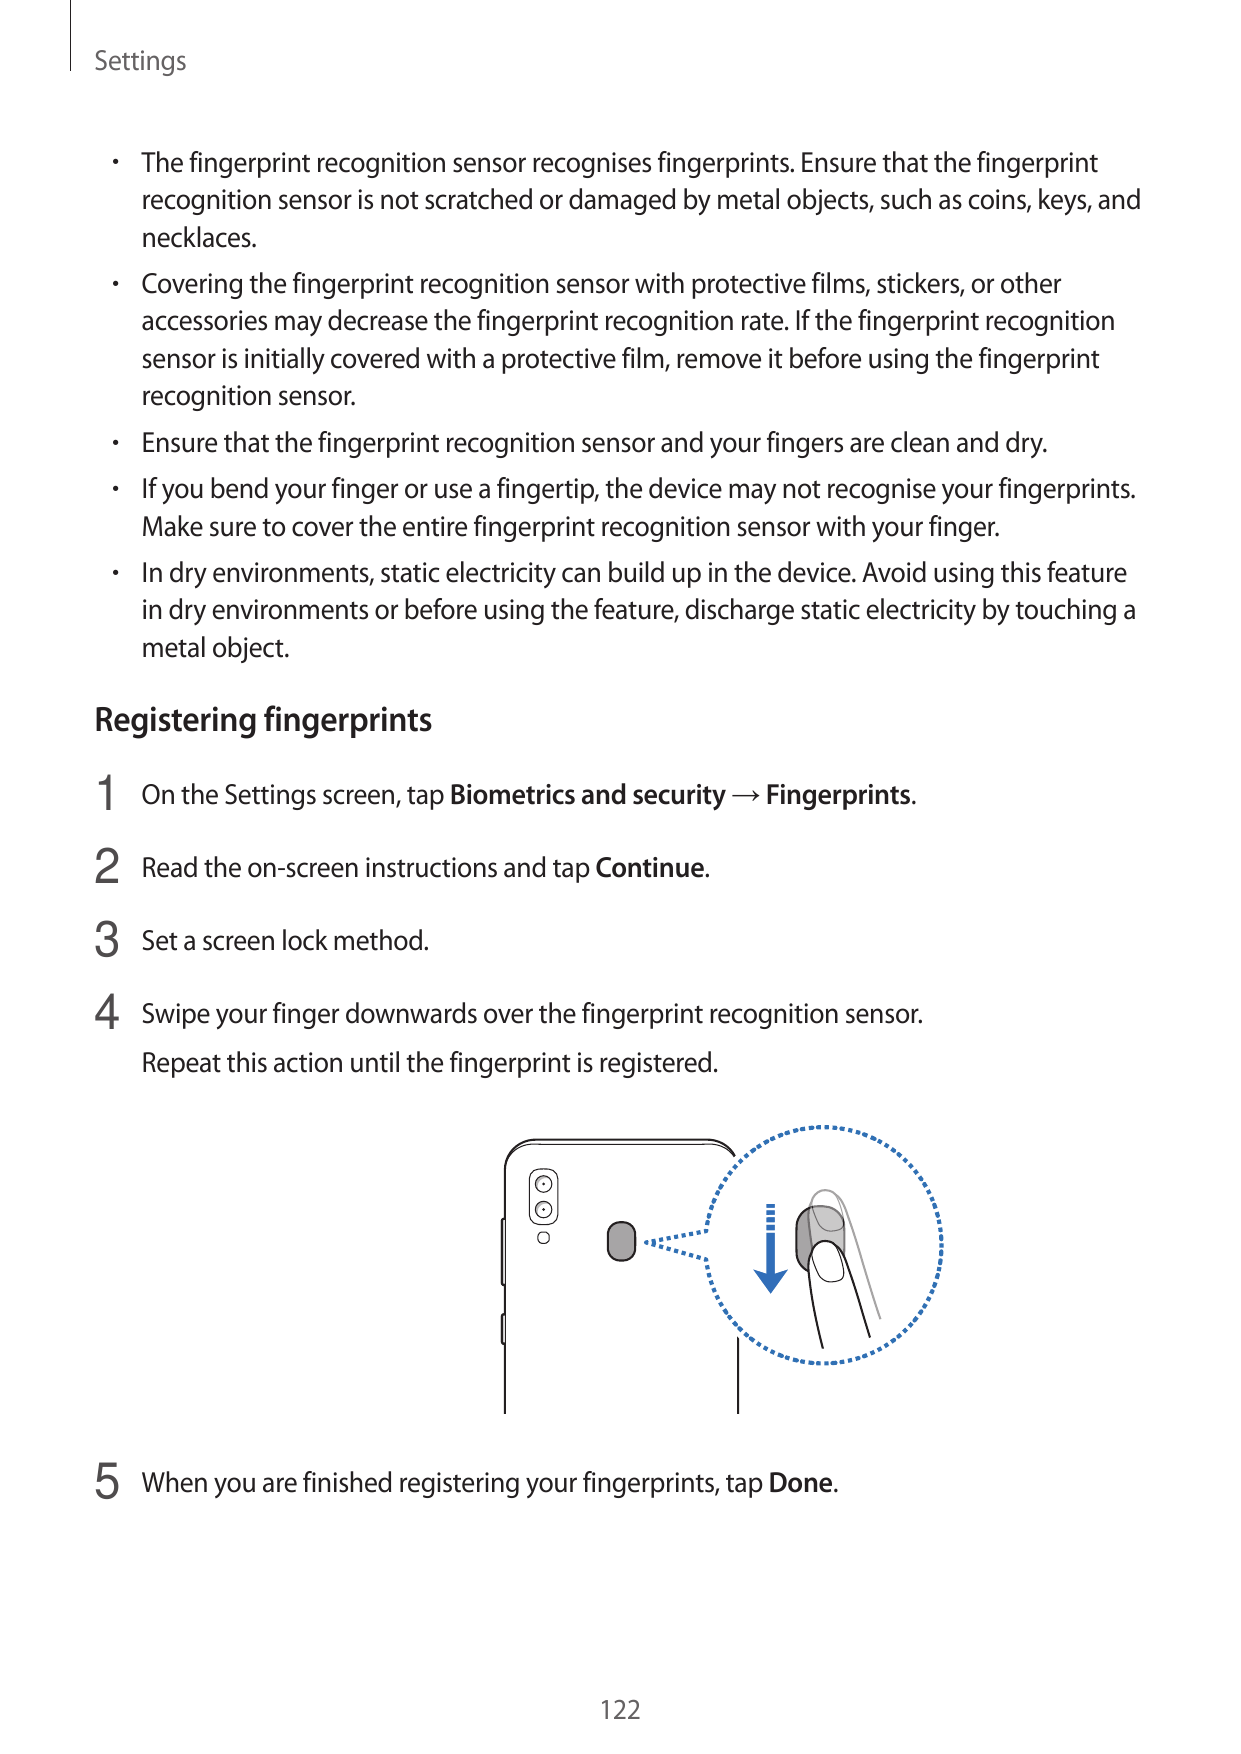 Settings• The fingerprint recognition sensor recognises fingerprints. Ensure that the fingerprintrecognition sensor is not scrat